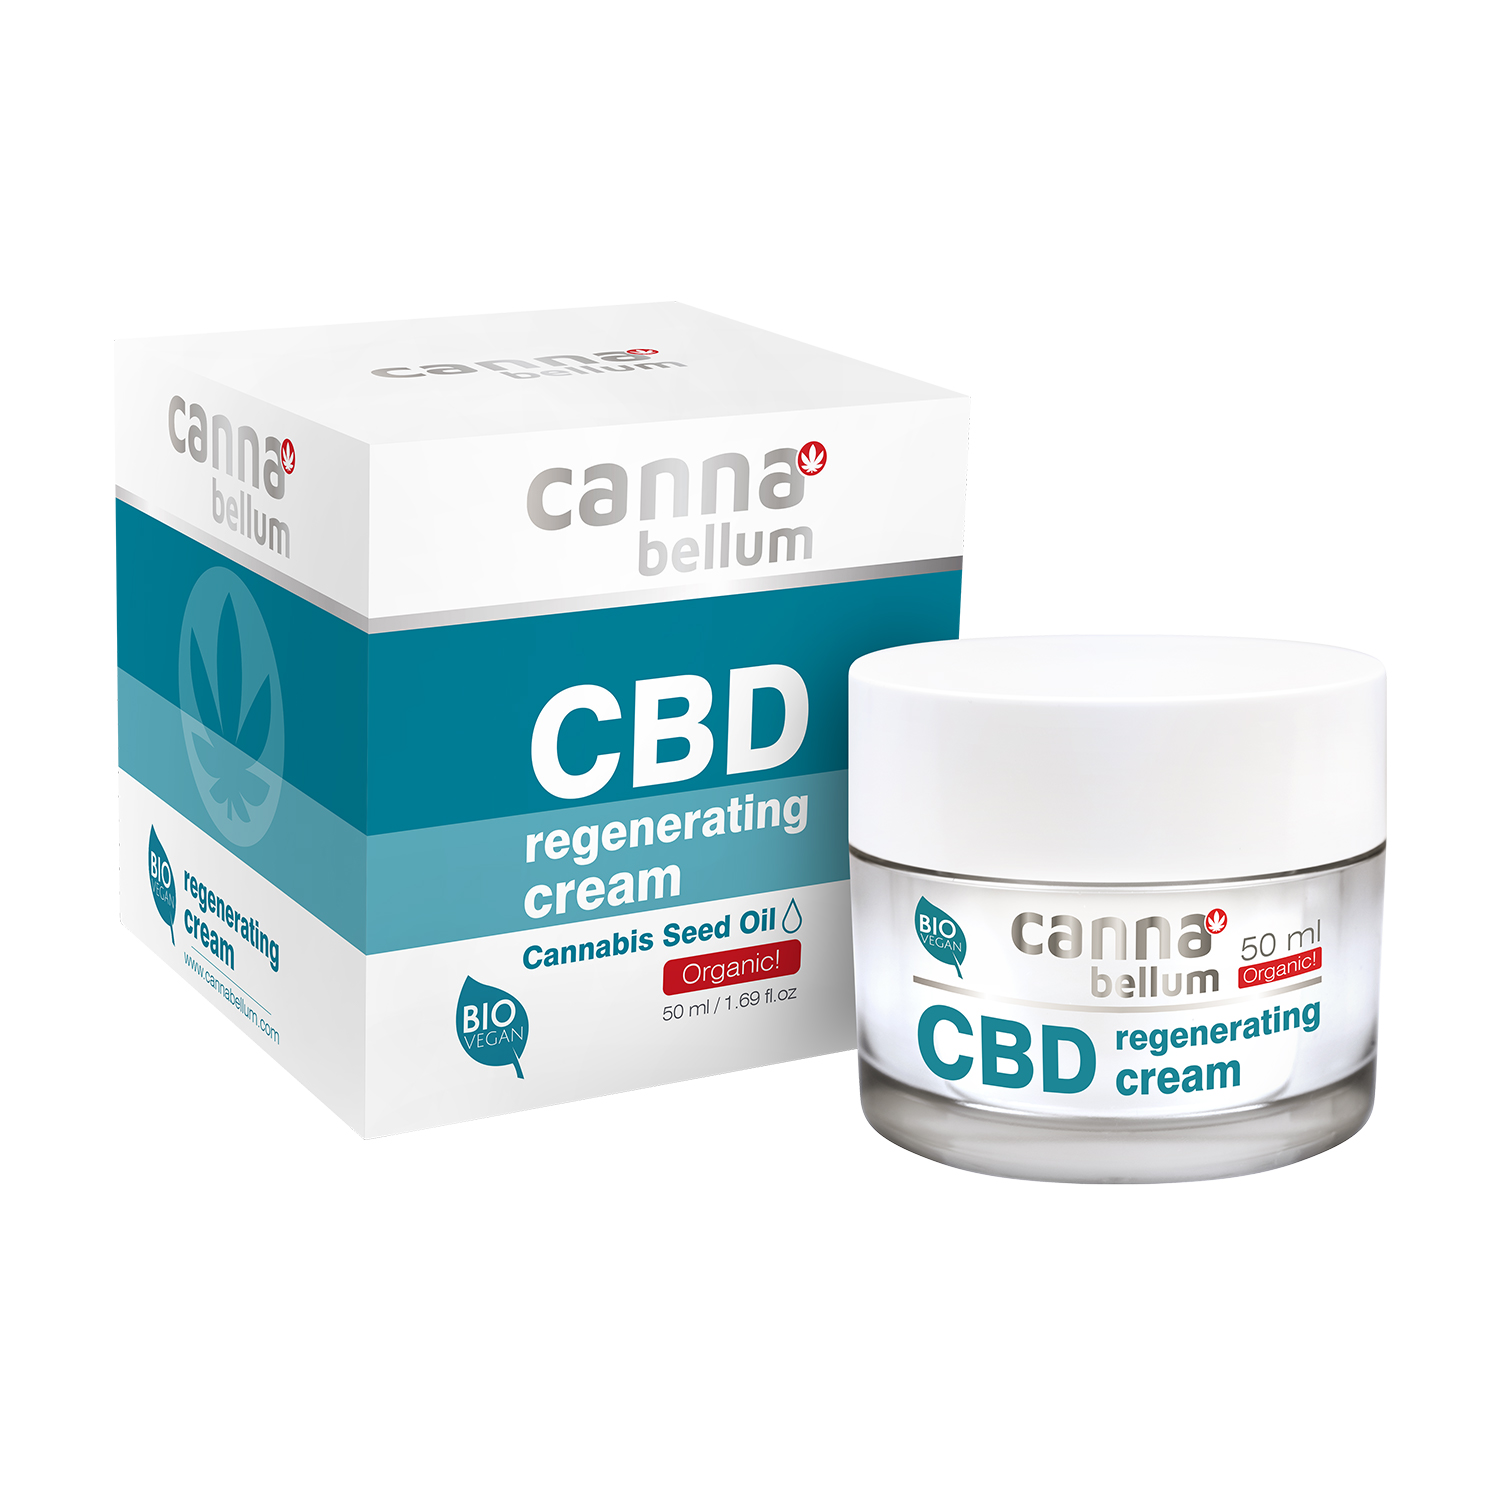 Cannabellum CBD regenerating cream 50ml P1253 komplet WEB 29